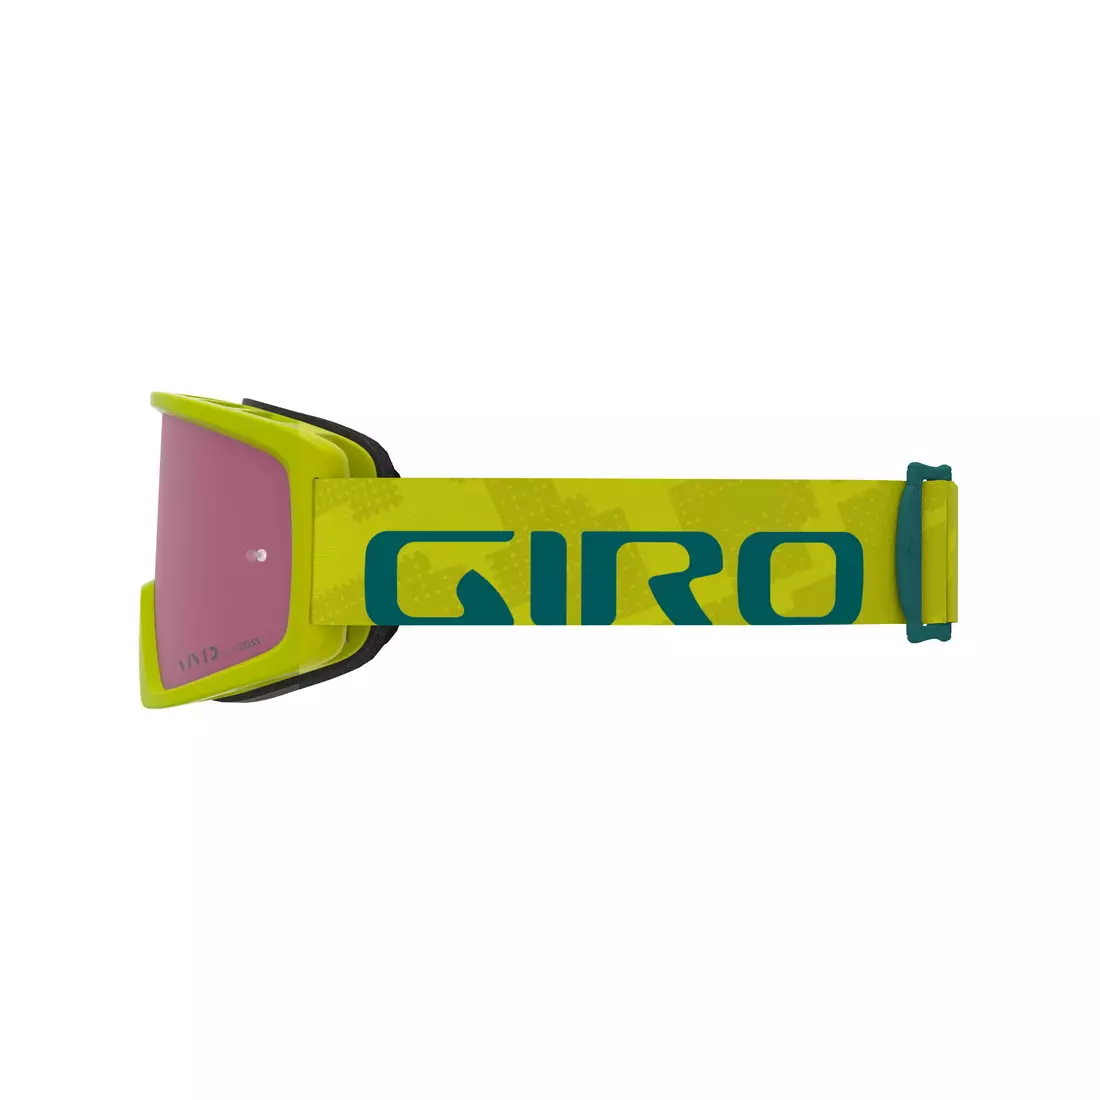 GIRO Fahrradbrille tazz mtb citron fanatic (farbiges Glas VIVID-Carl Zeiss TRAIL + Transparentglas 99% S0) GR-7114192